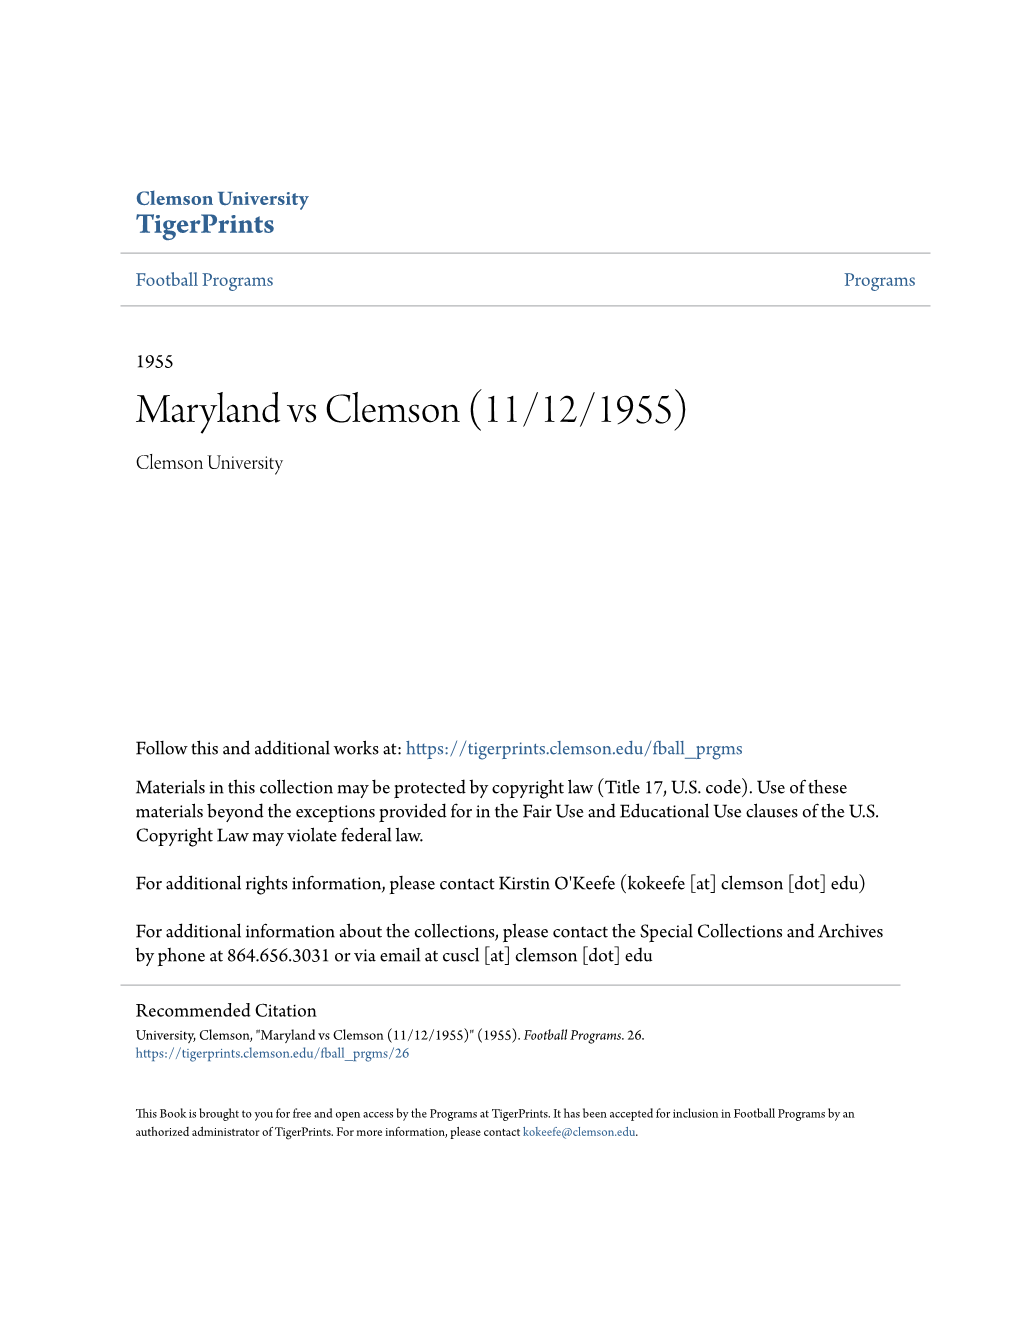 Maryland Vs Clemson (11/12/1955) Clemson University